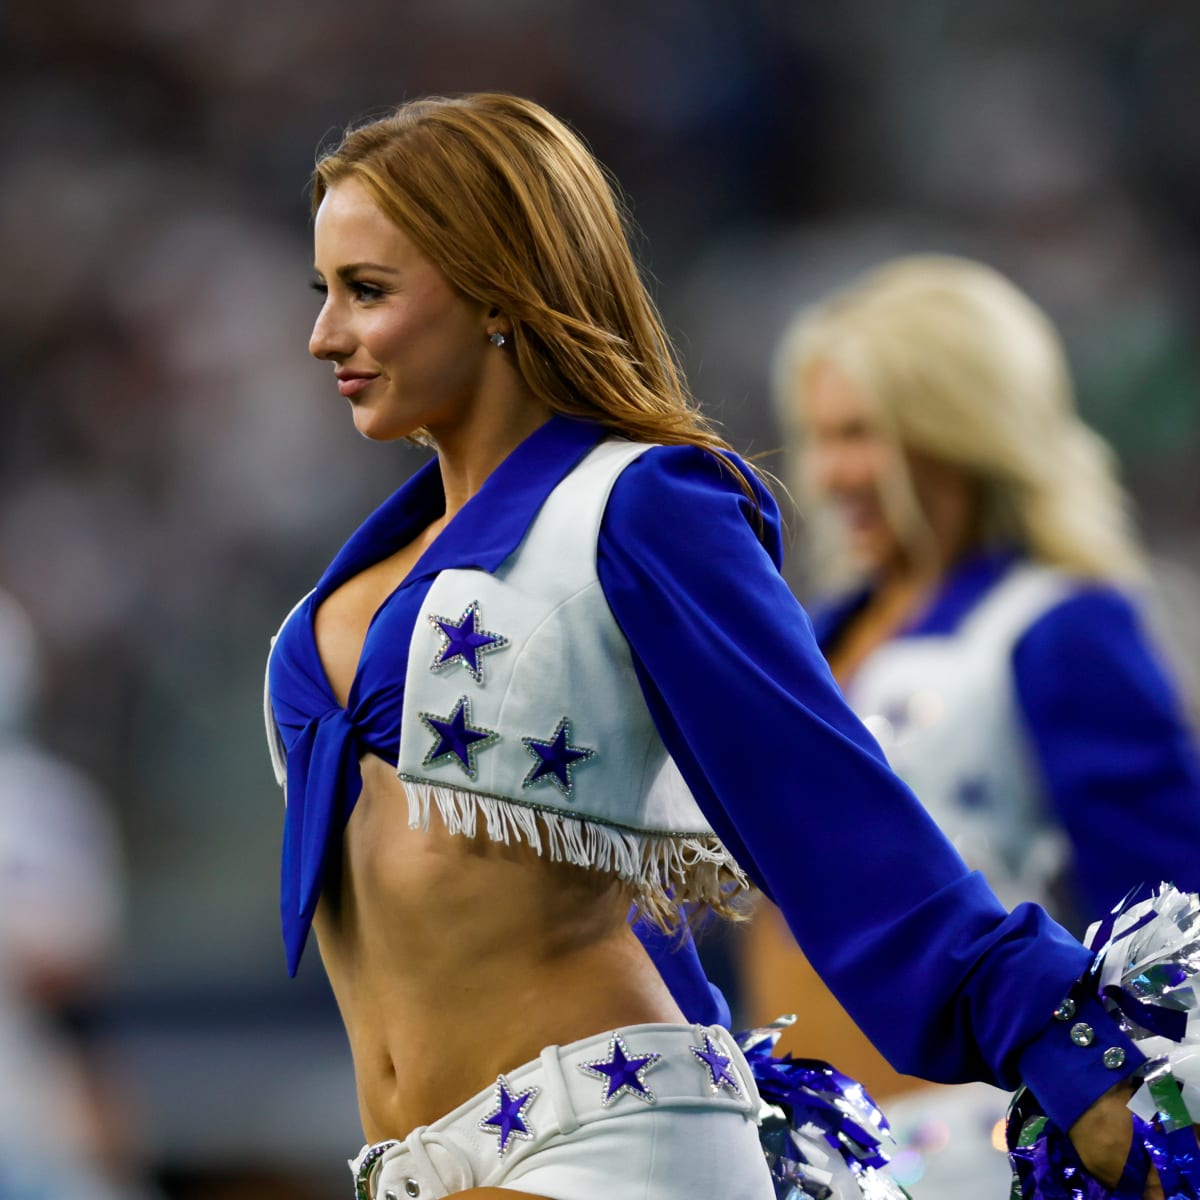 Dallas Cowboys Cheerleaders en X: When you believe in yourself